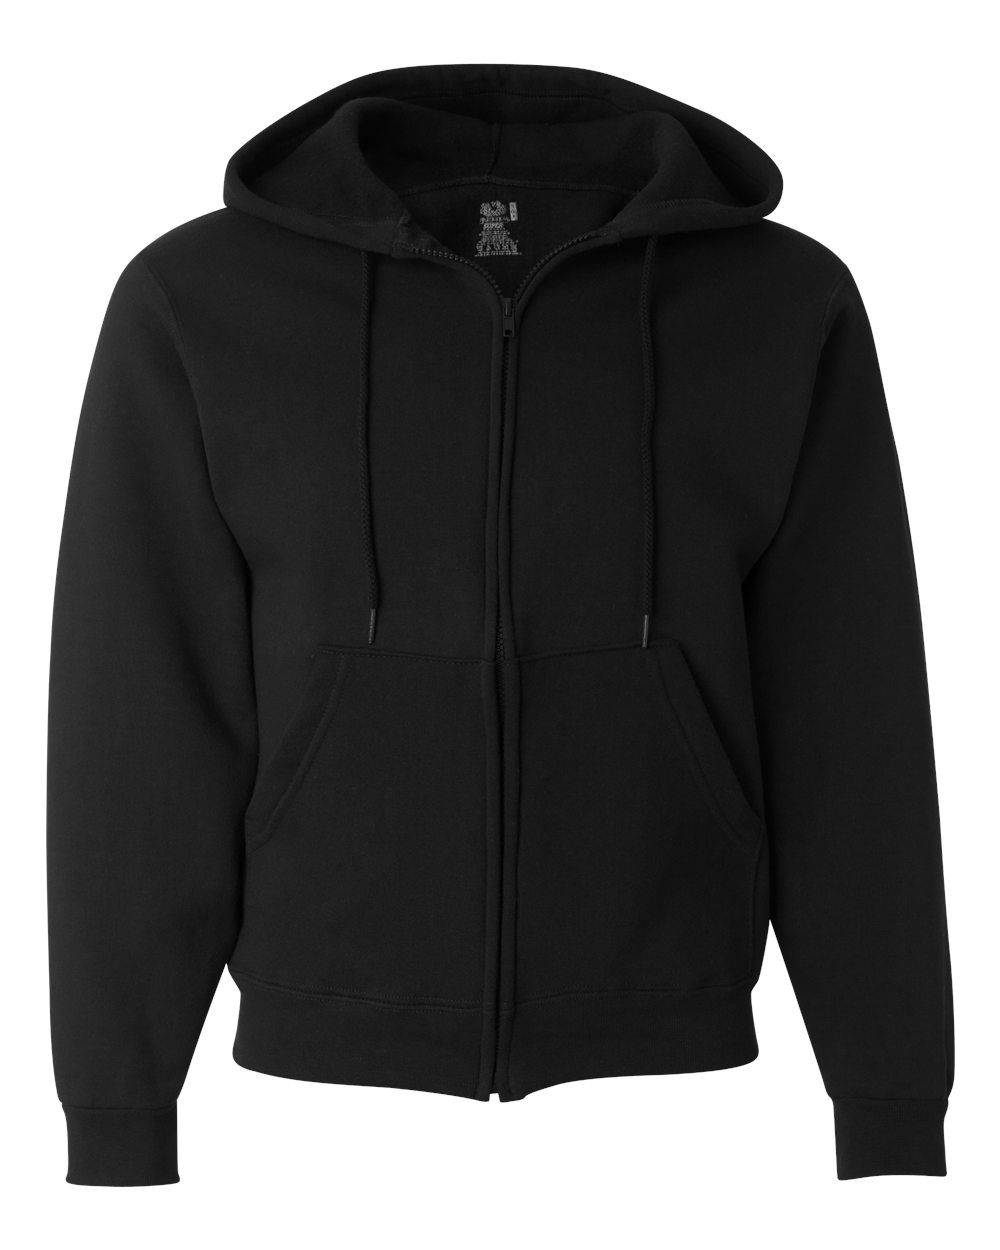 Supercotton Full-Zip Hooded Sweatshirt - 82230R-